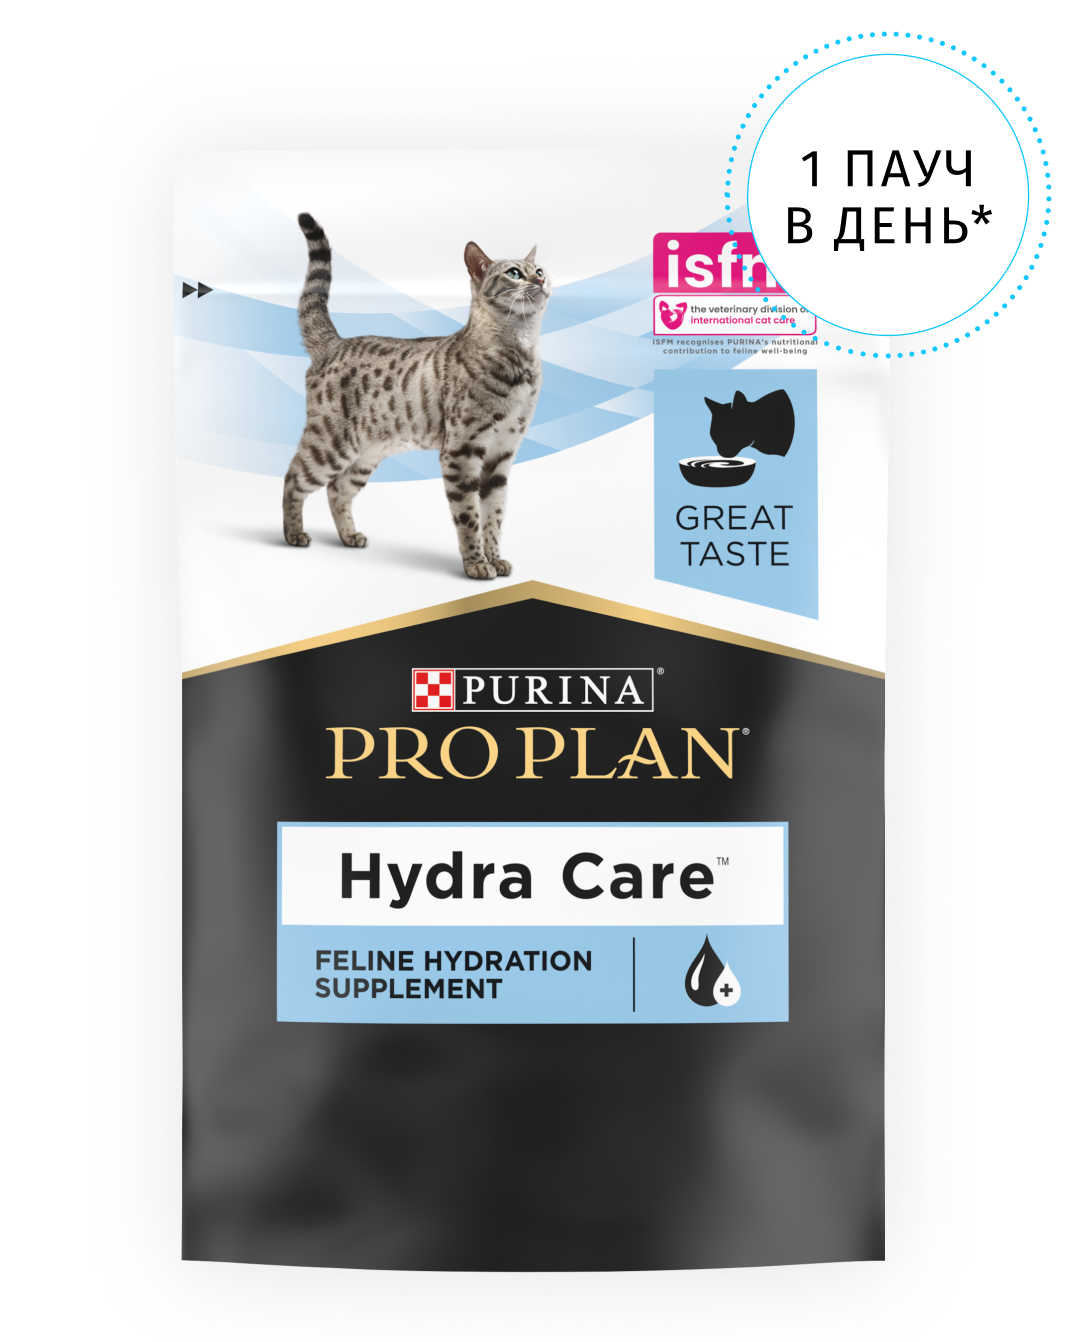 Purina PRO PLAN Hydra Care